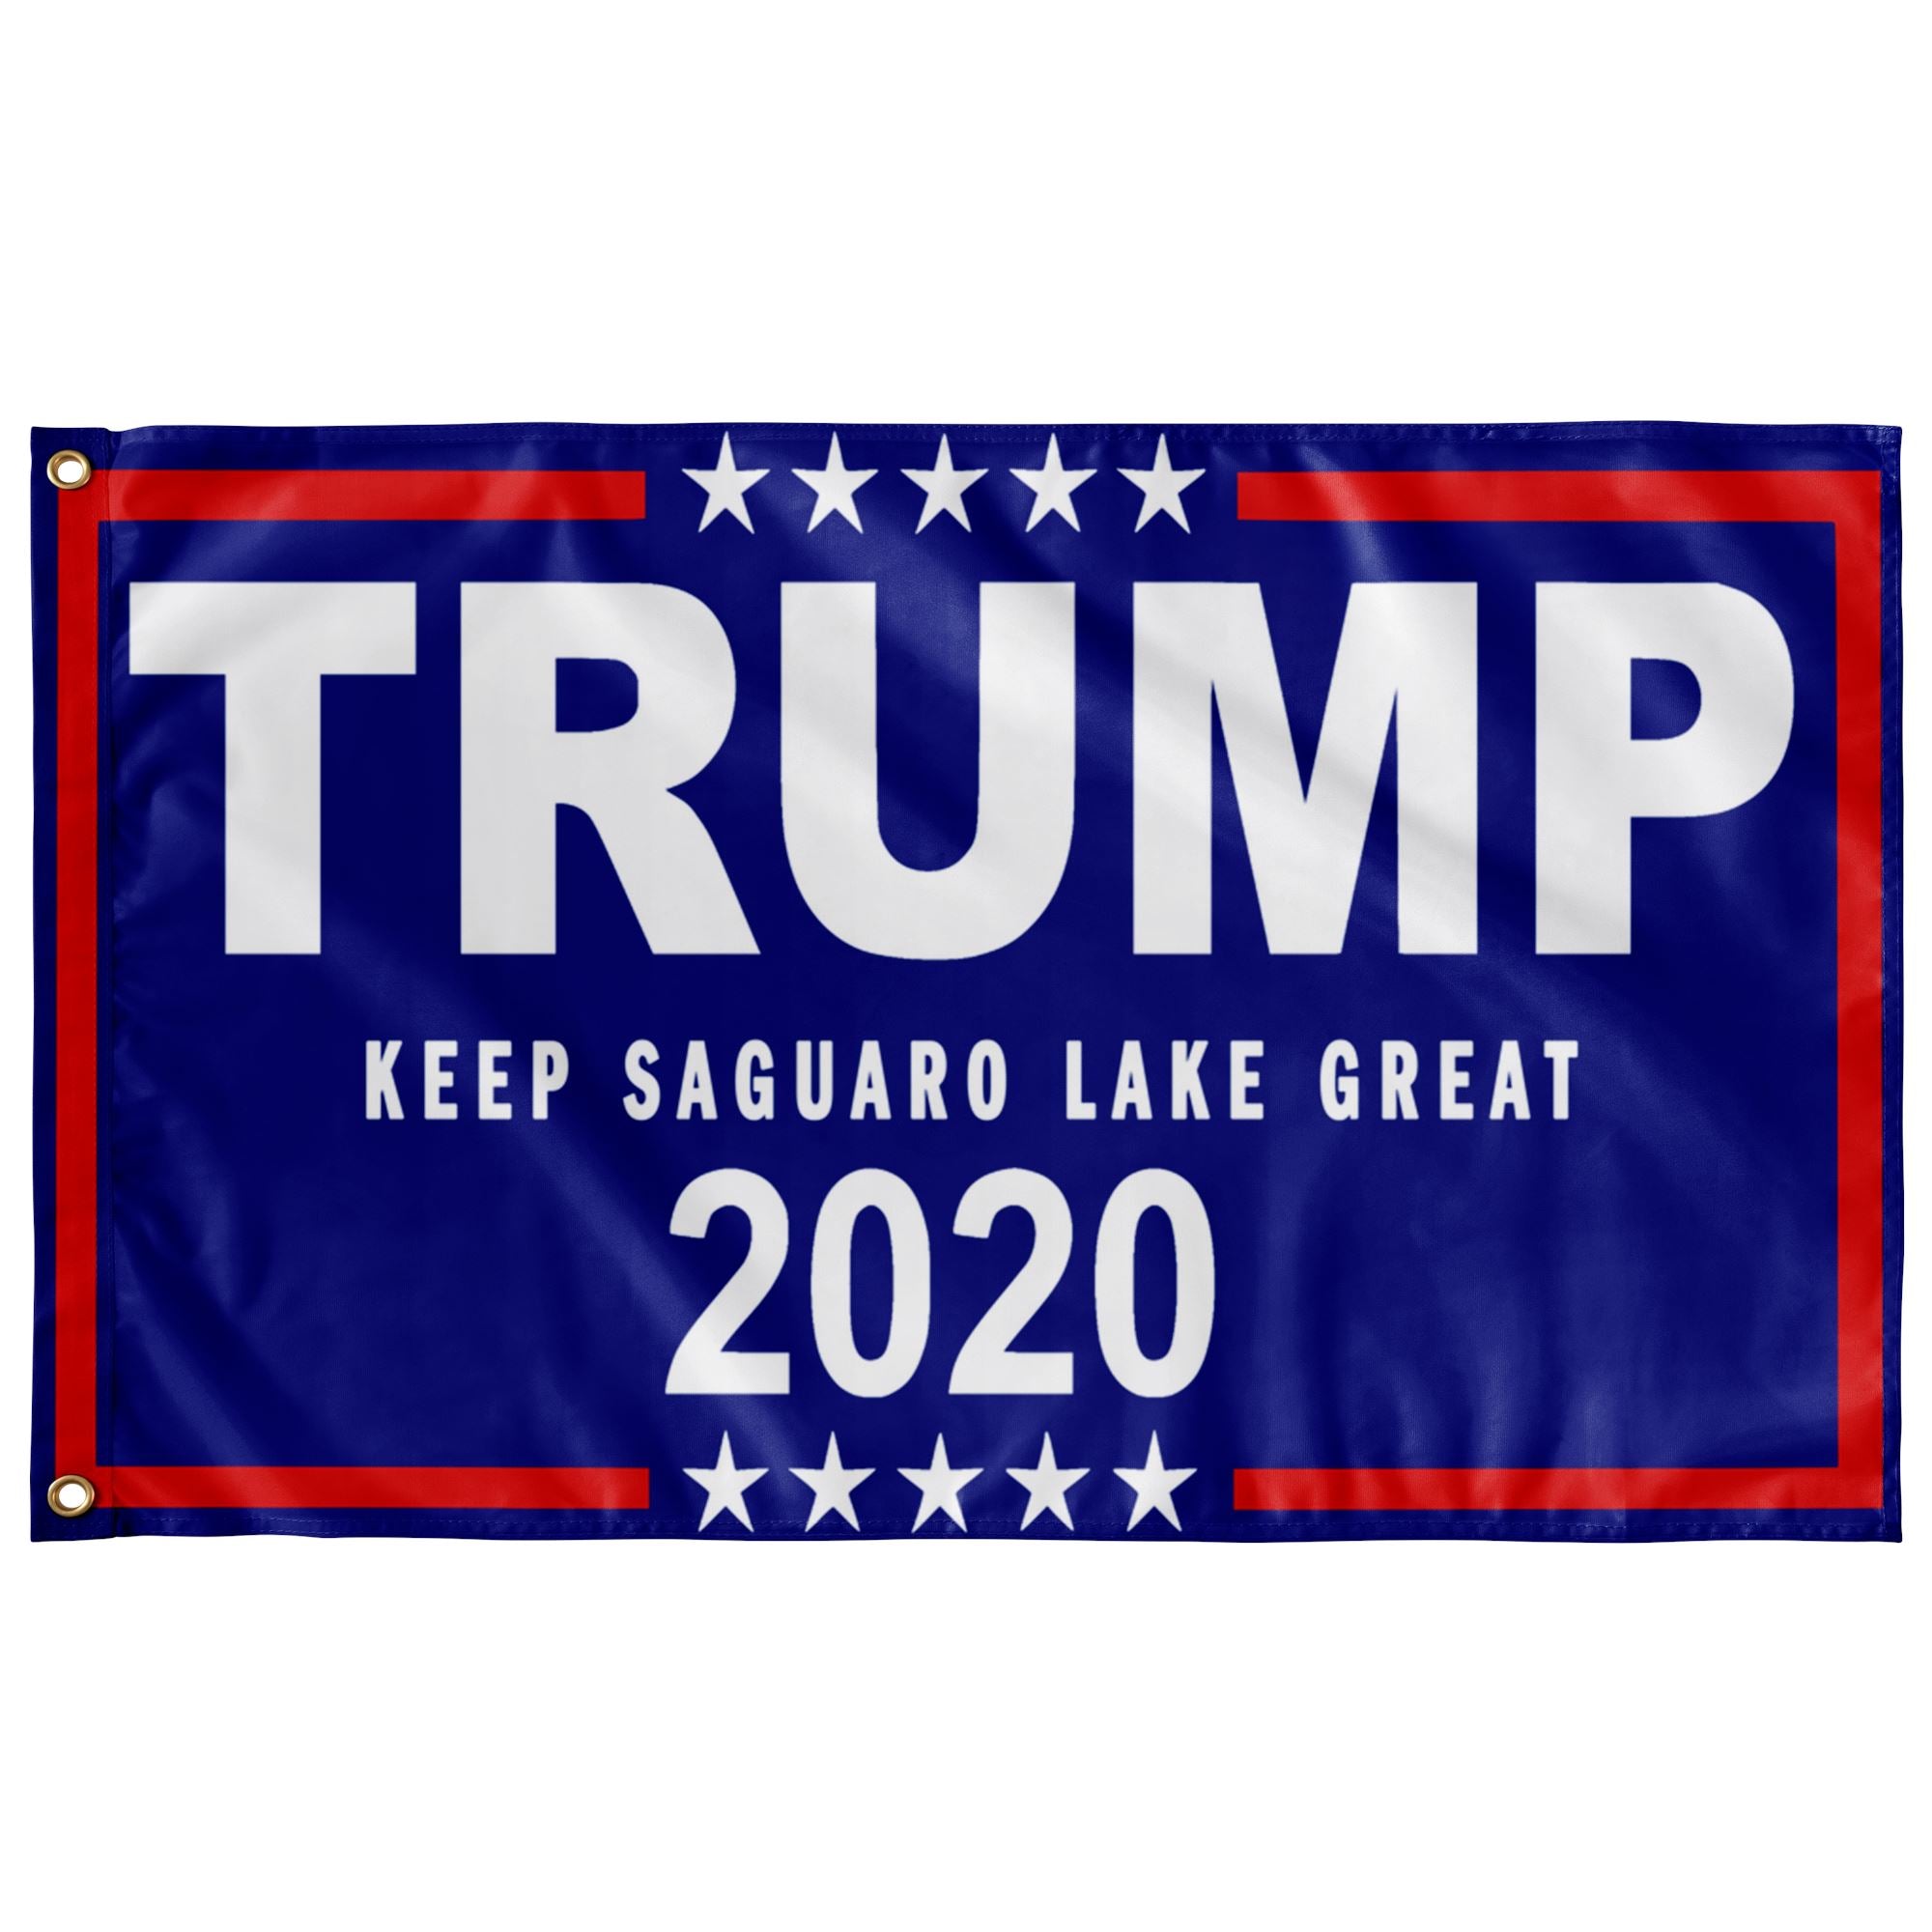 Trump Boat Flags - Keep Saguaro Lake Great - Houseboat Kings